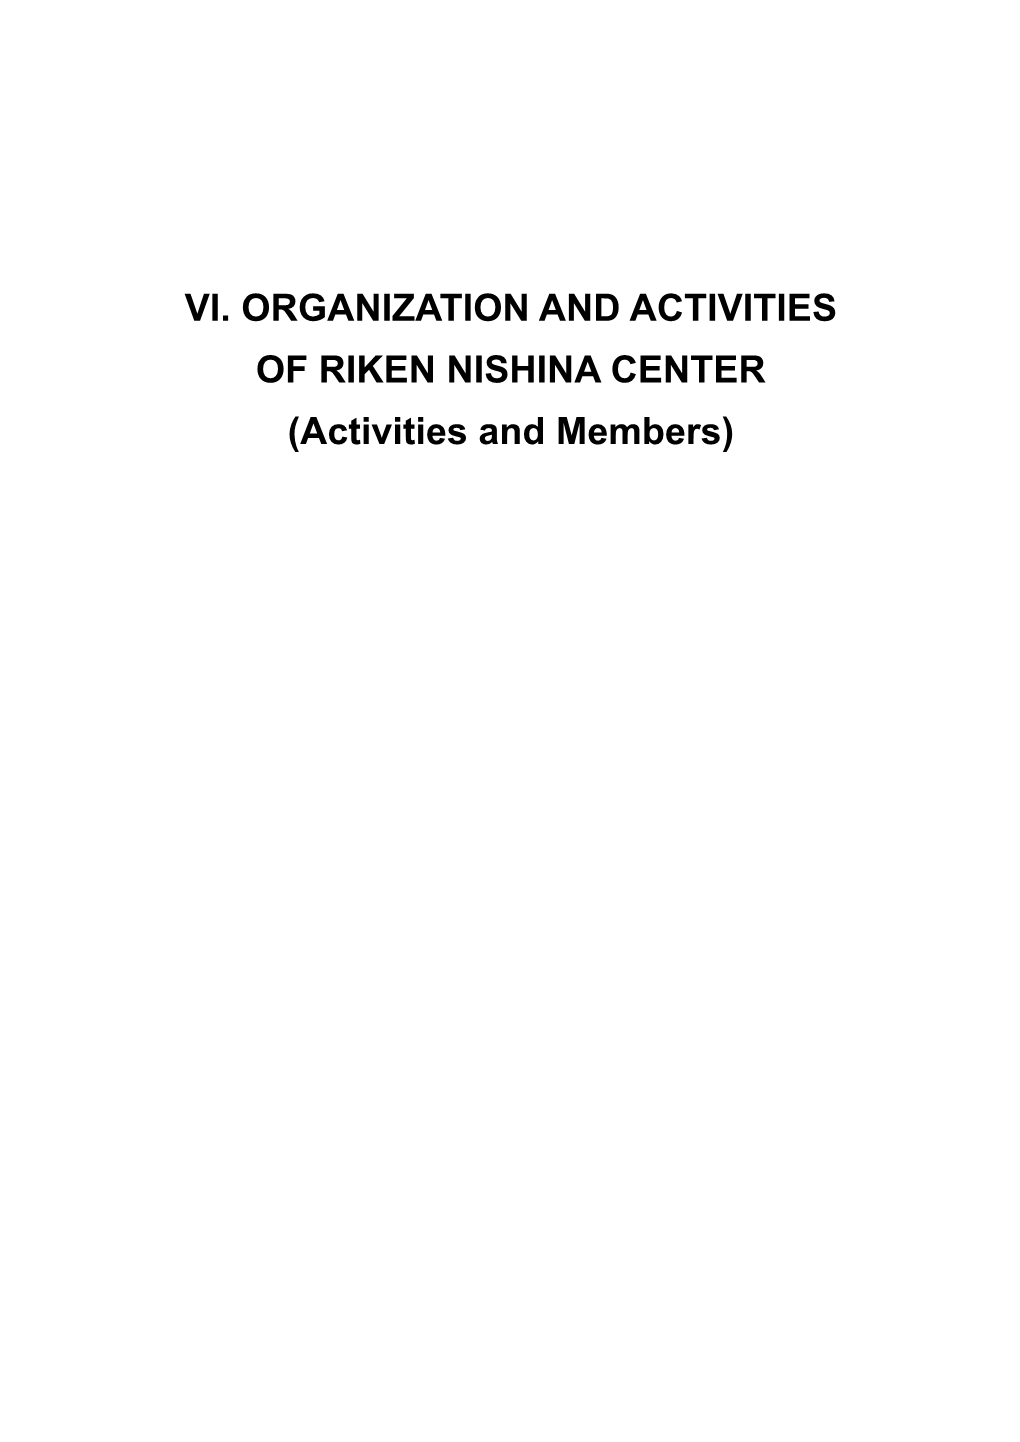 VI. ORGANIZATION and ACTIVITIES of RIKEN NISHINA CENTER (Activities and Members) Ⅵ